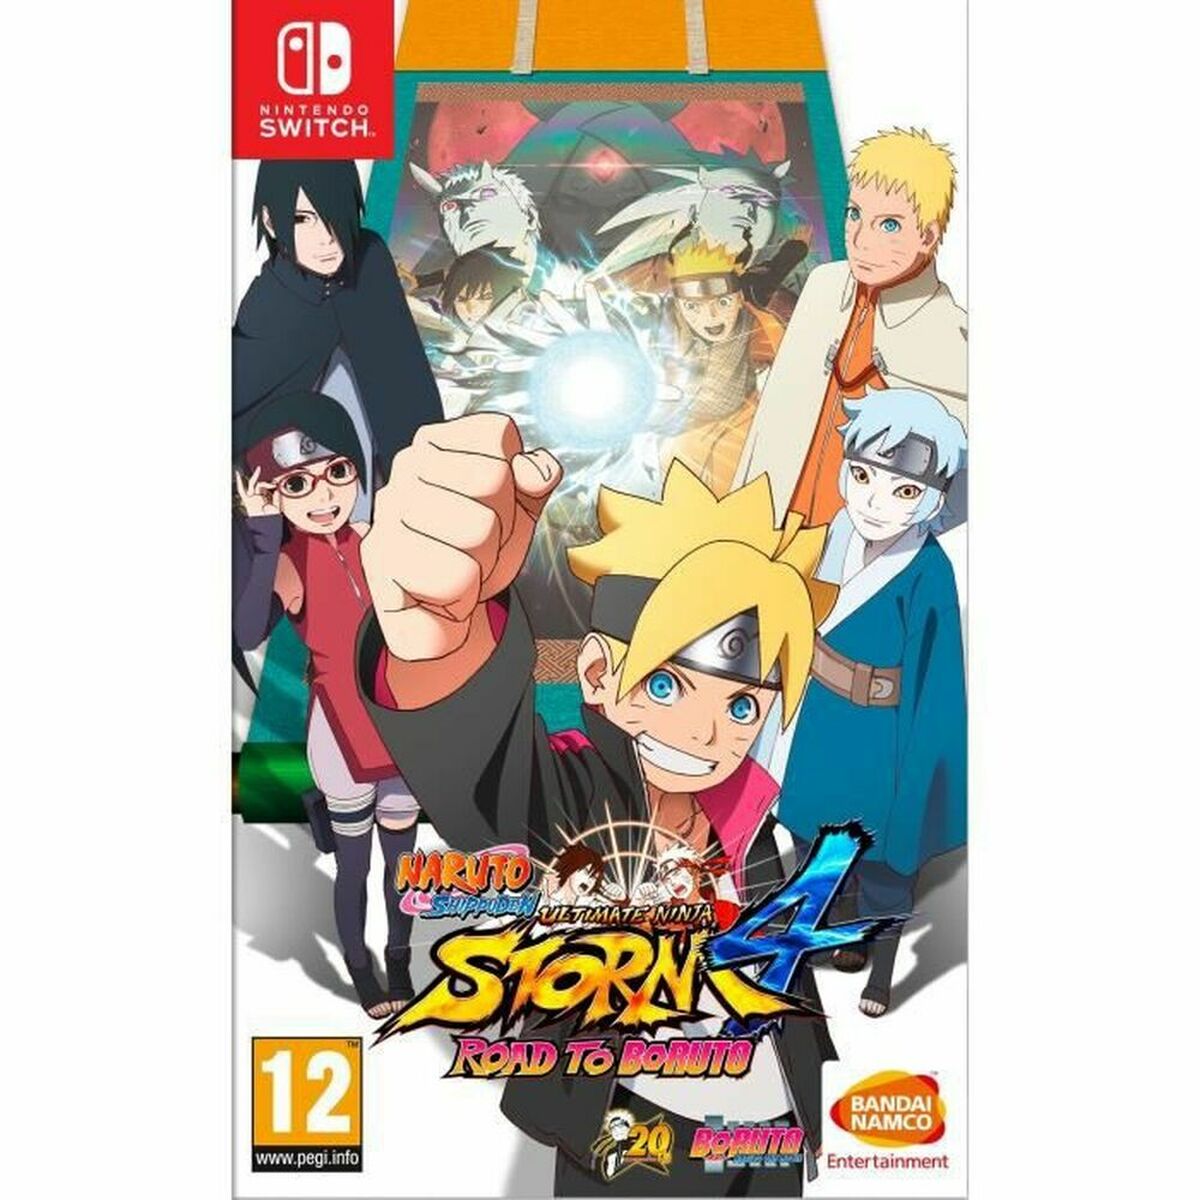 Videospiel für Switch Bandai Naruto Shippuden: Ultimate Ninja Storm 4 Road to Boruto